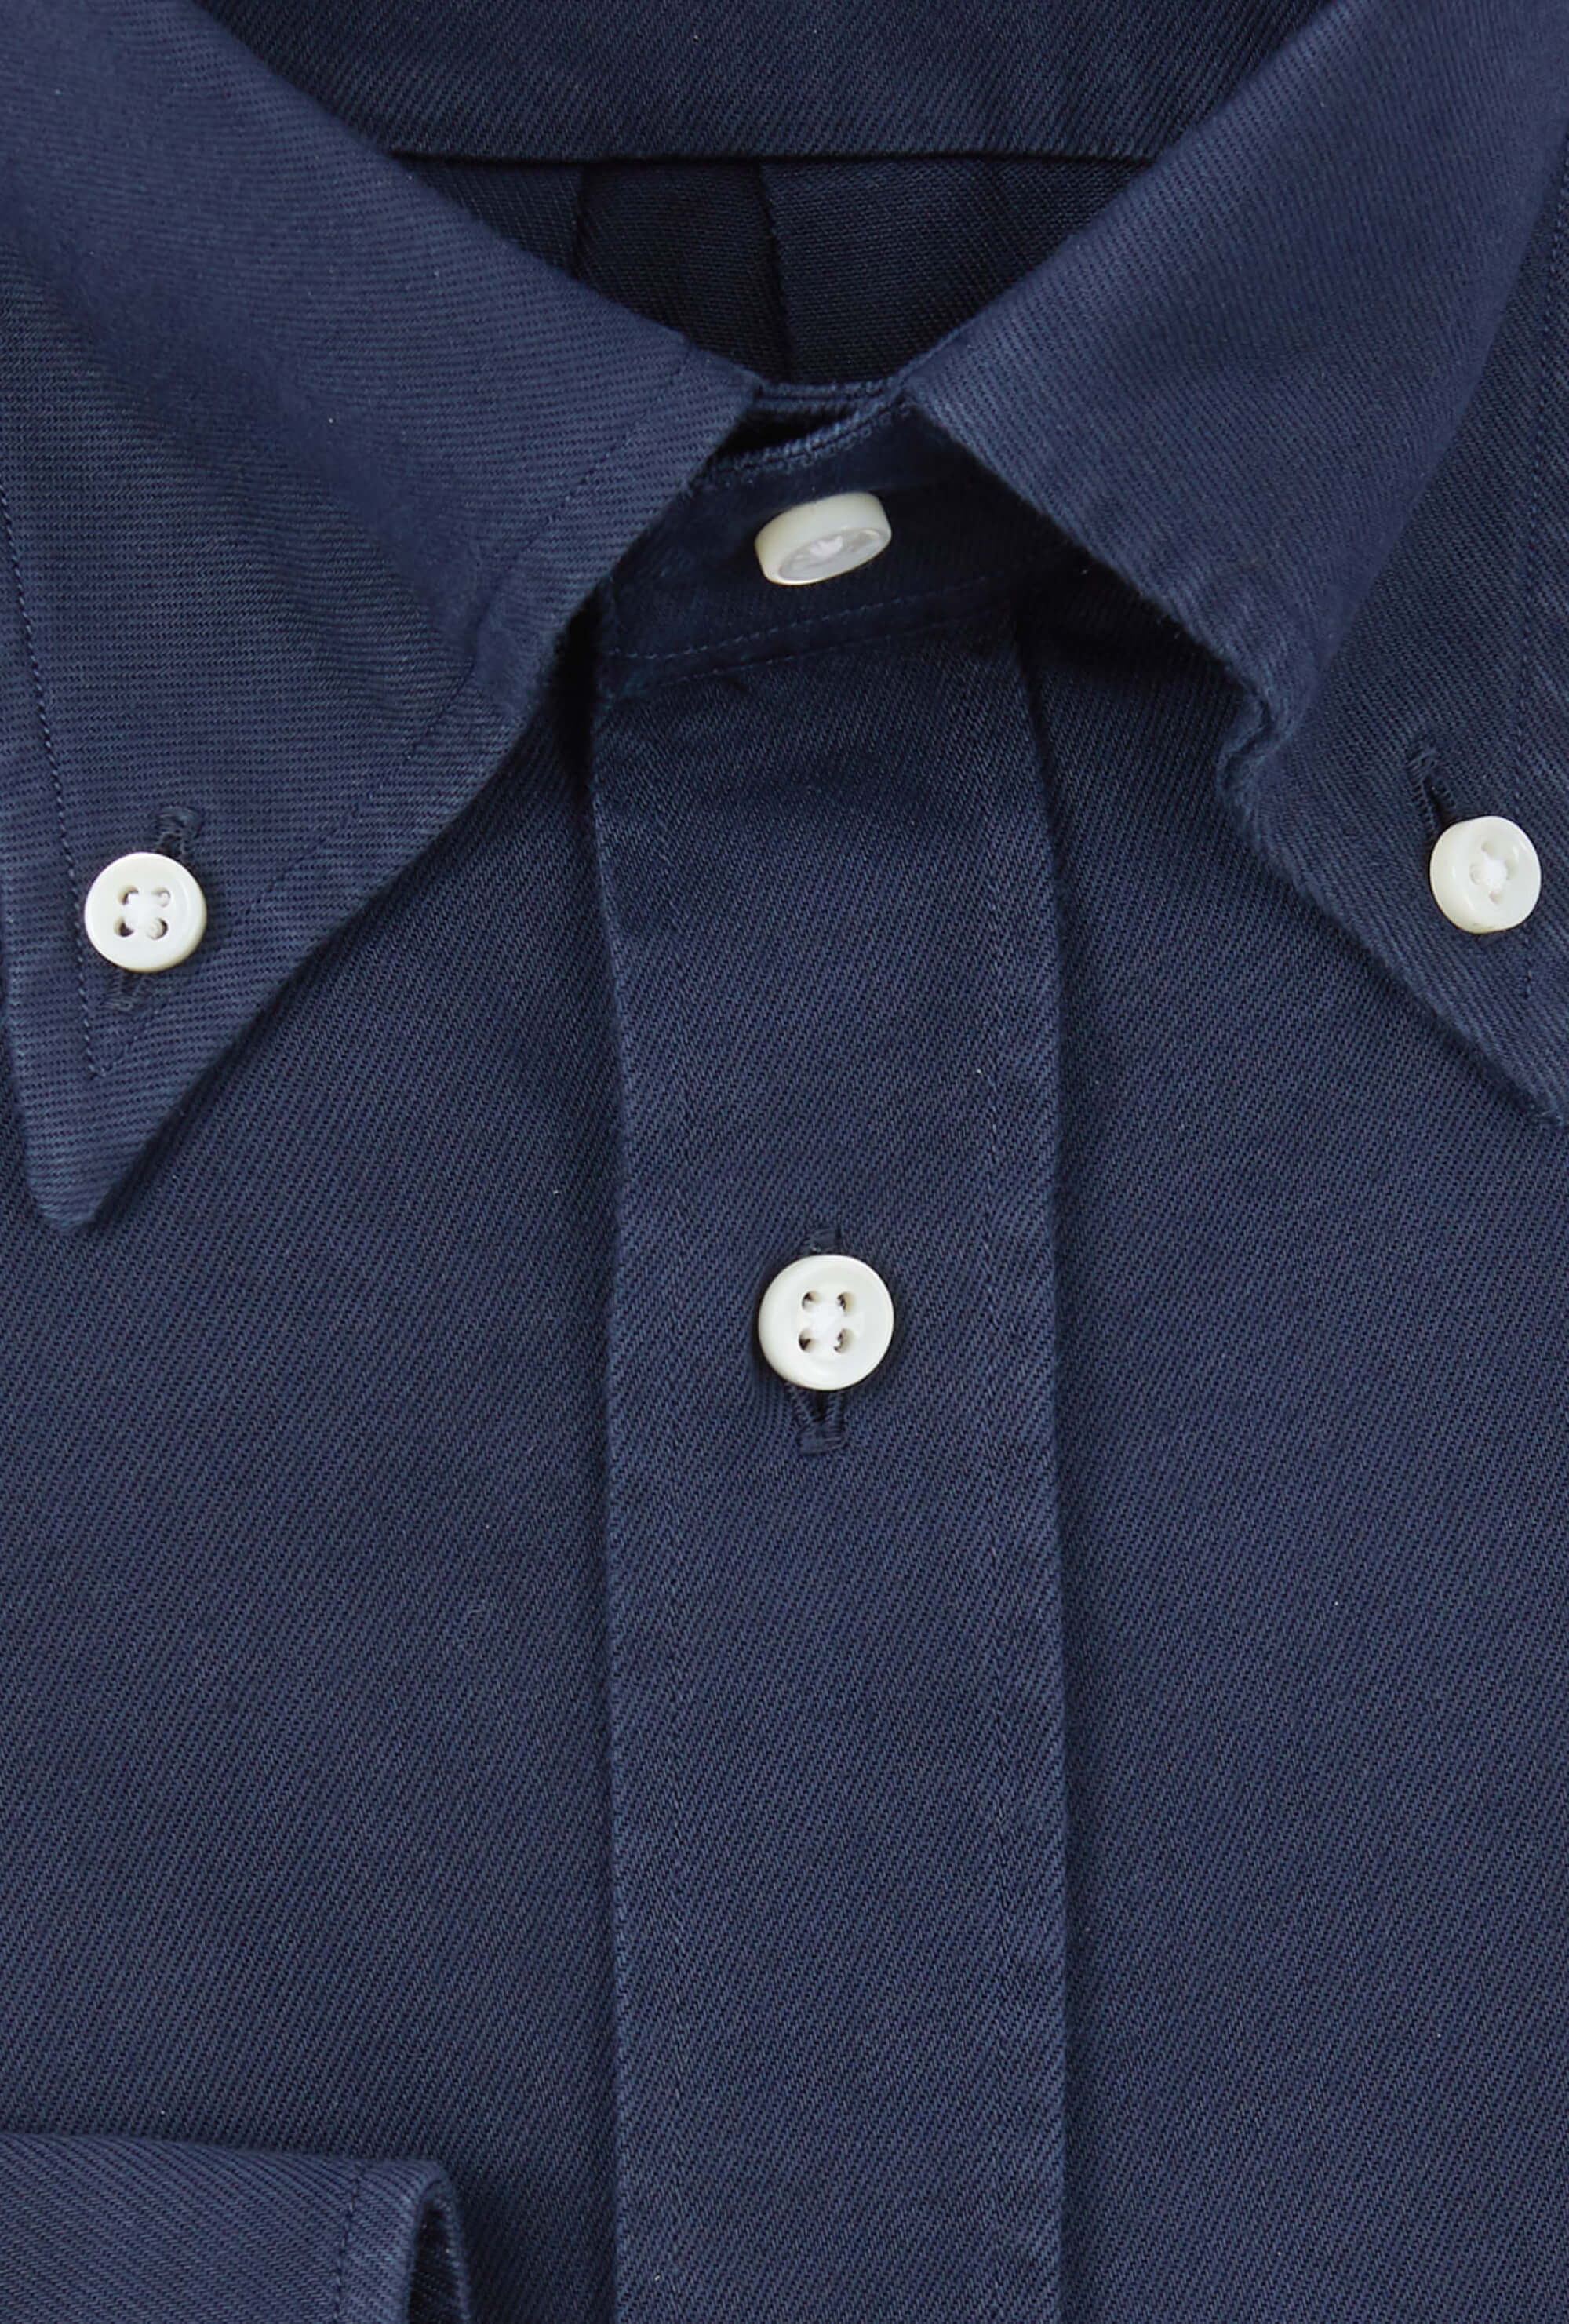 Button Down Sport Shirt Garment Dye Navy